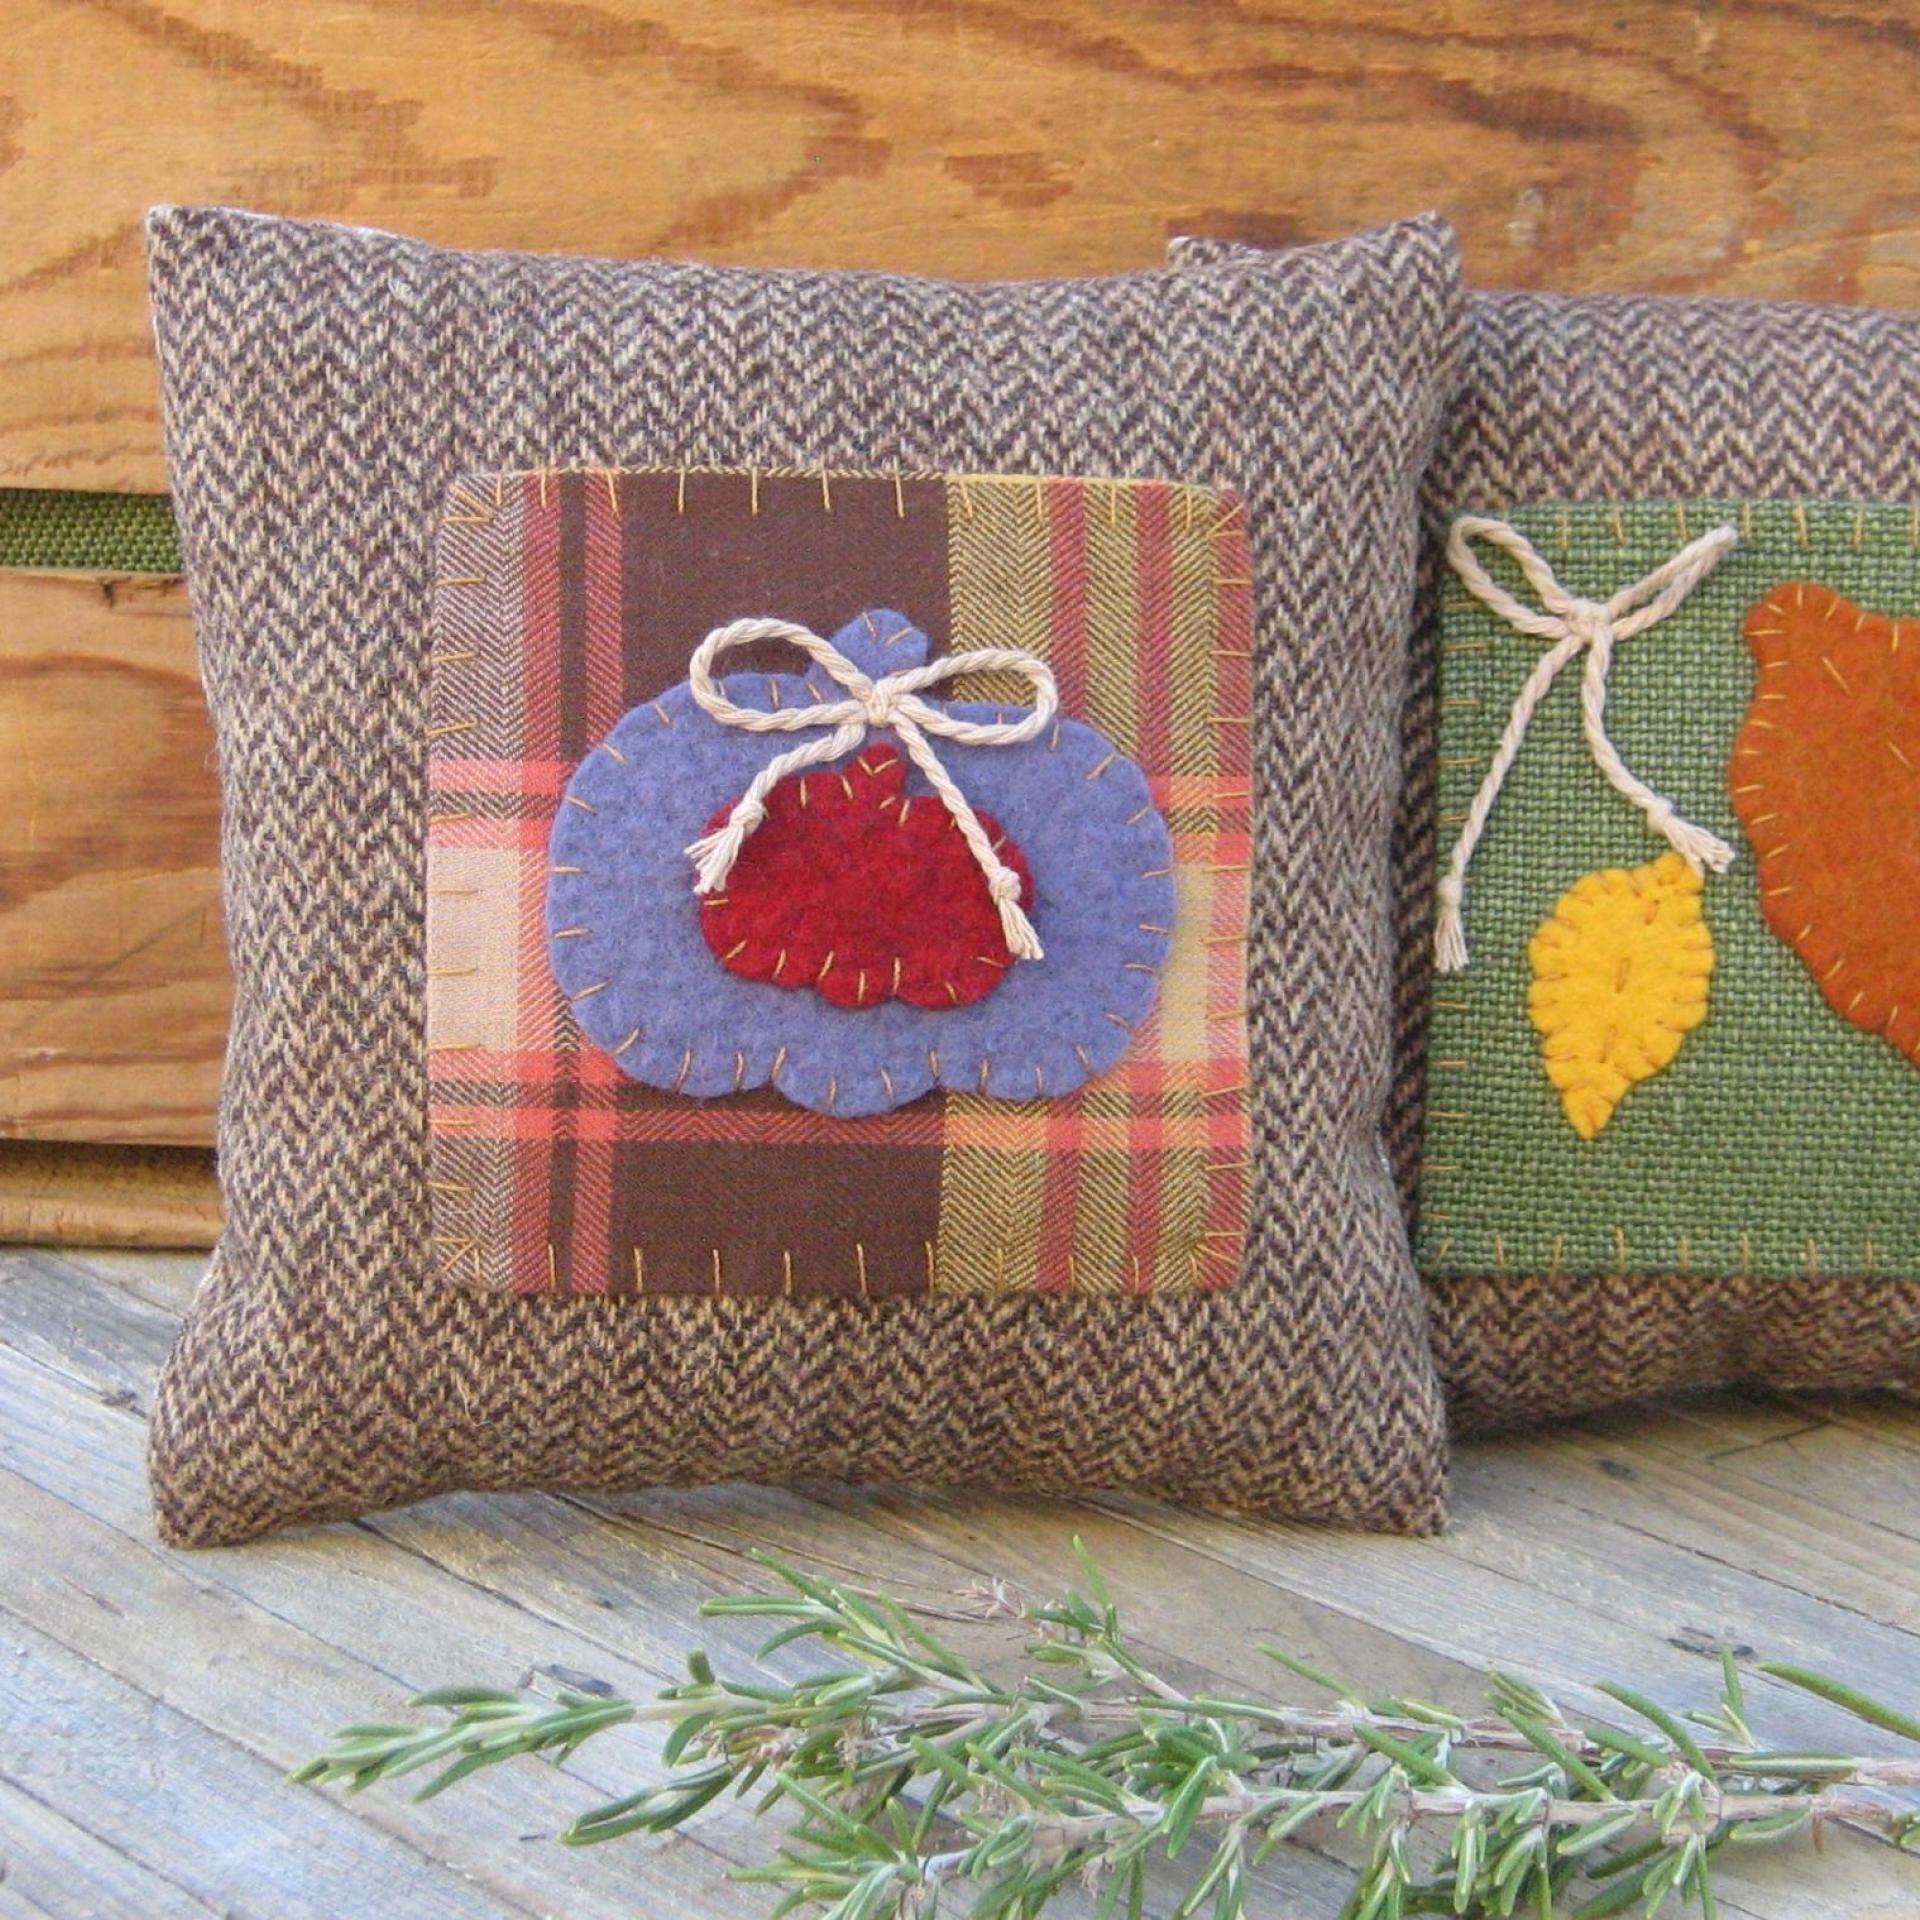 Mini Tweedy Pillow Set 7" for Fall Décor, Autumn Mantel Decoration, Centerpiece for Fall Table, Seasonal Photo Props, USA Made